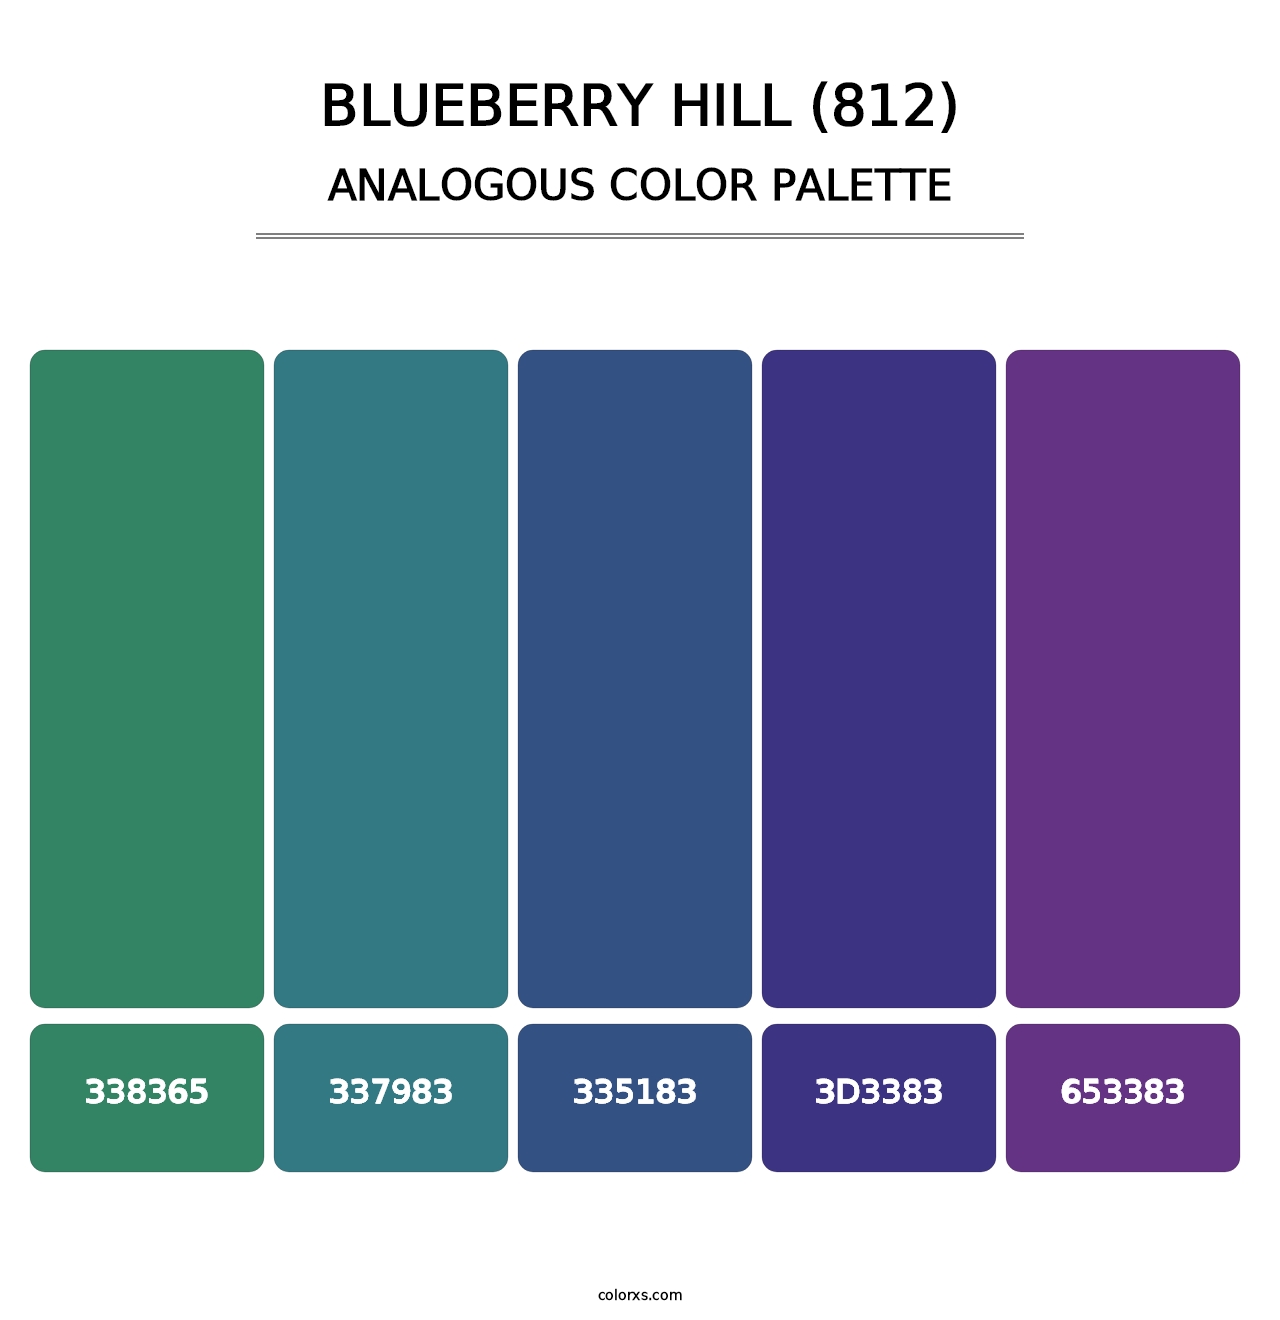 Blueberry Hill (812) - Analogous Color Palette